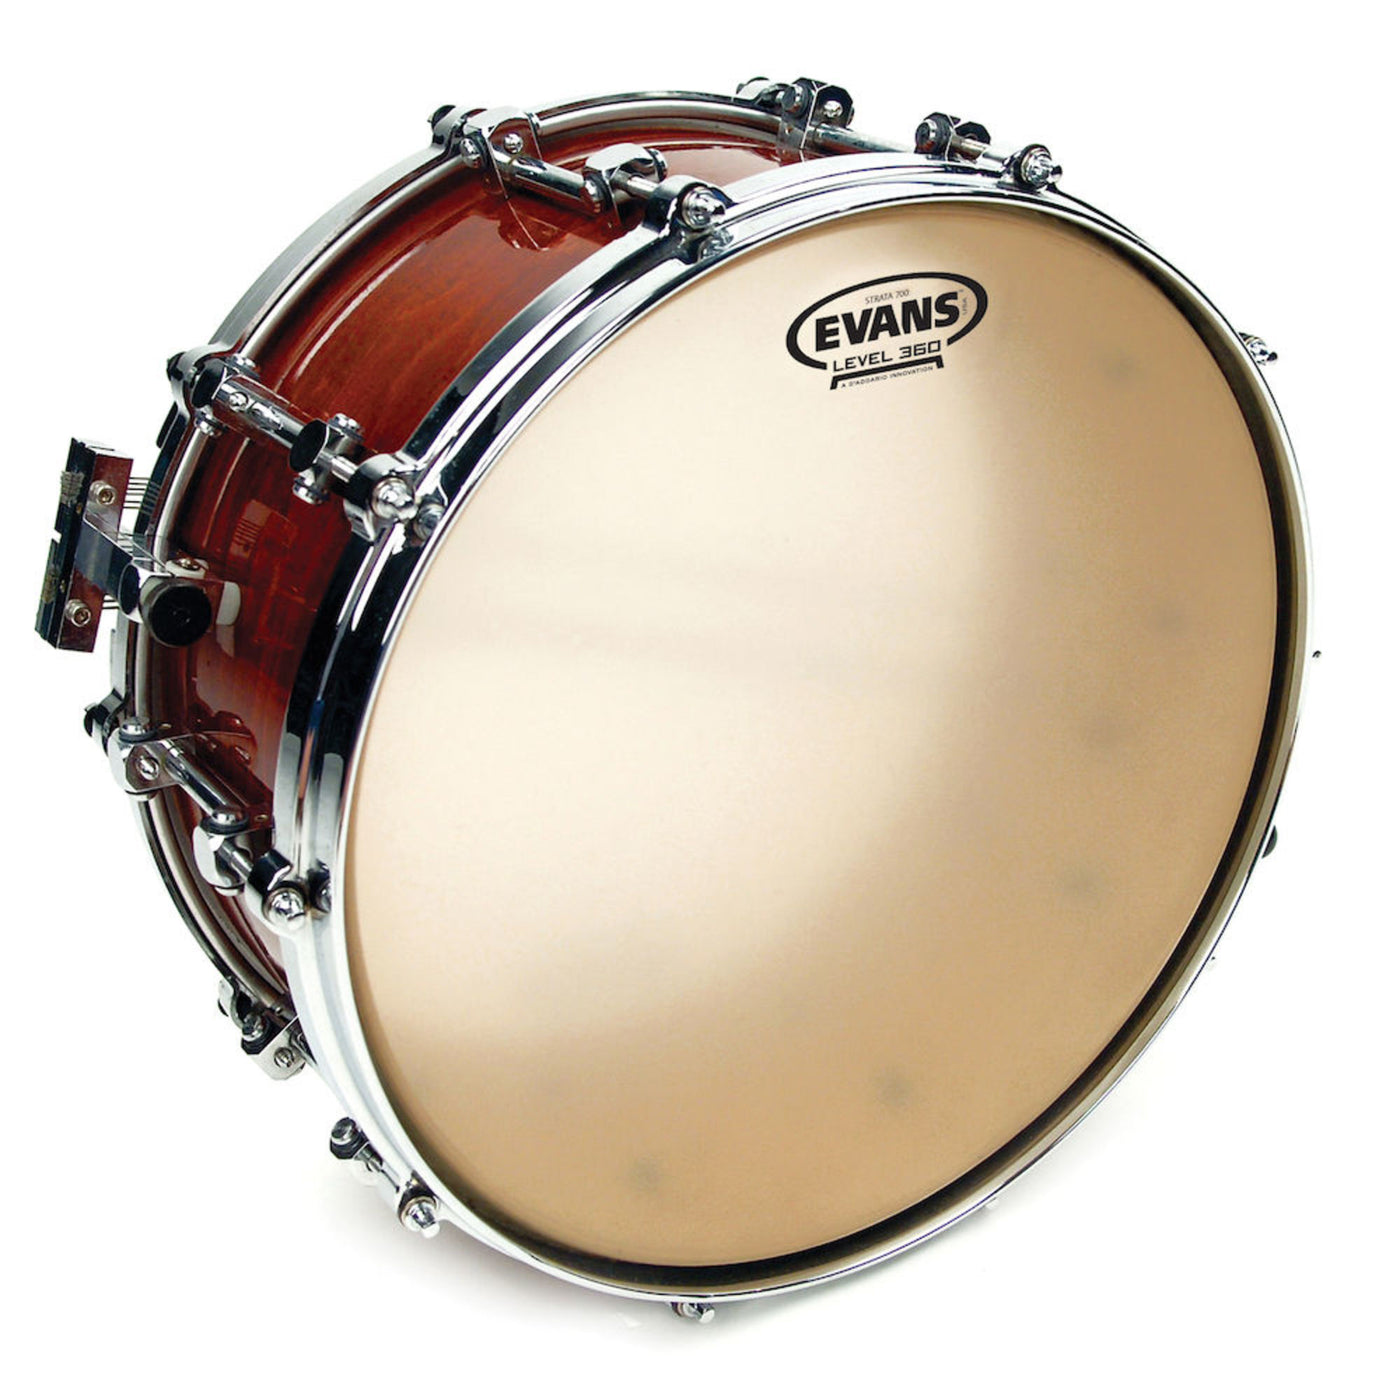 Evans Strata 700 Concert Snare Drum Head, 14 Inch